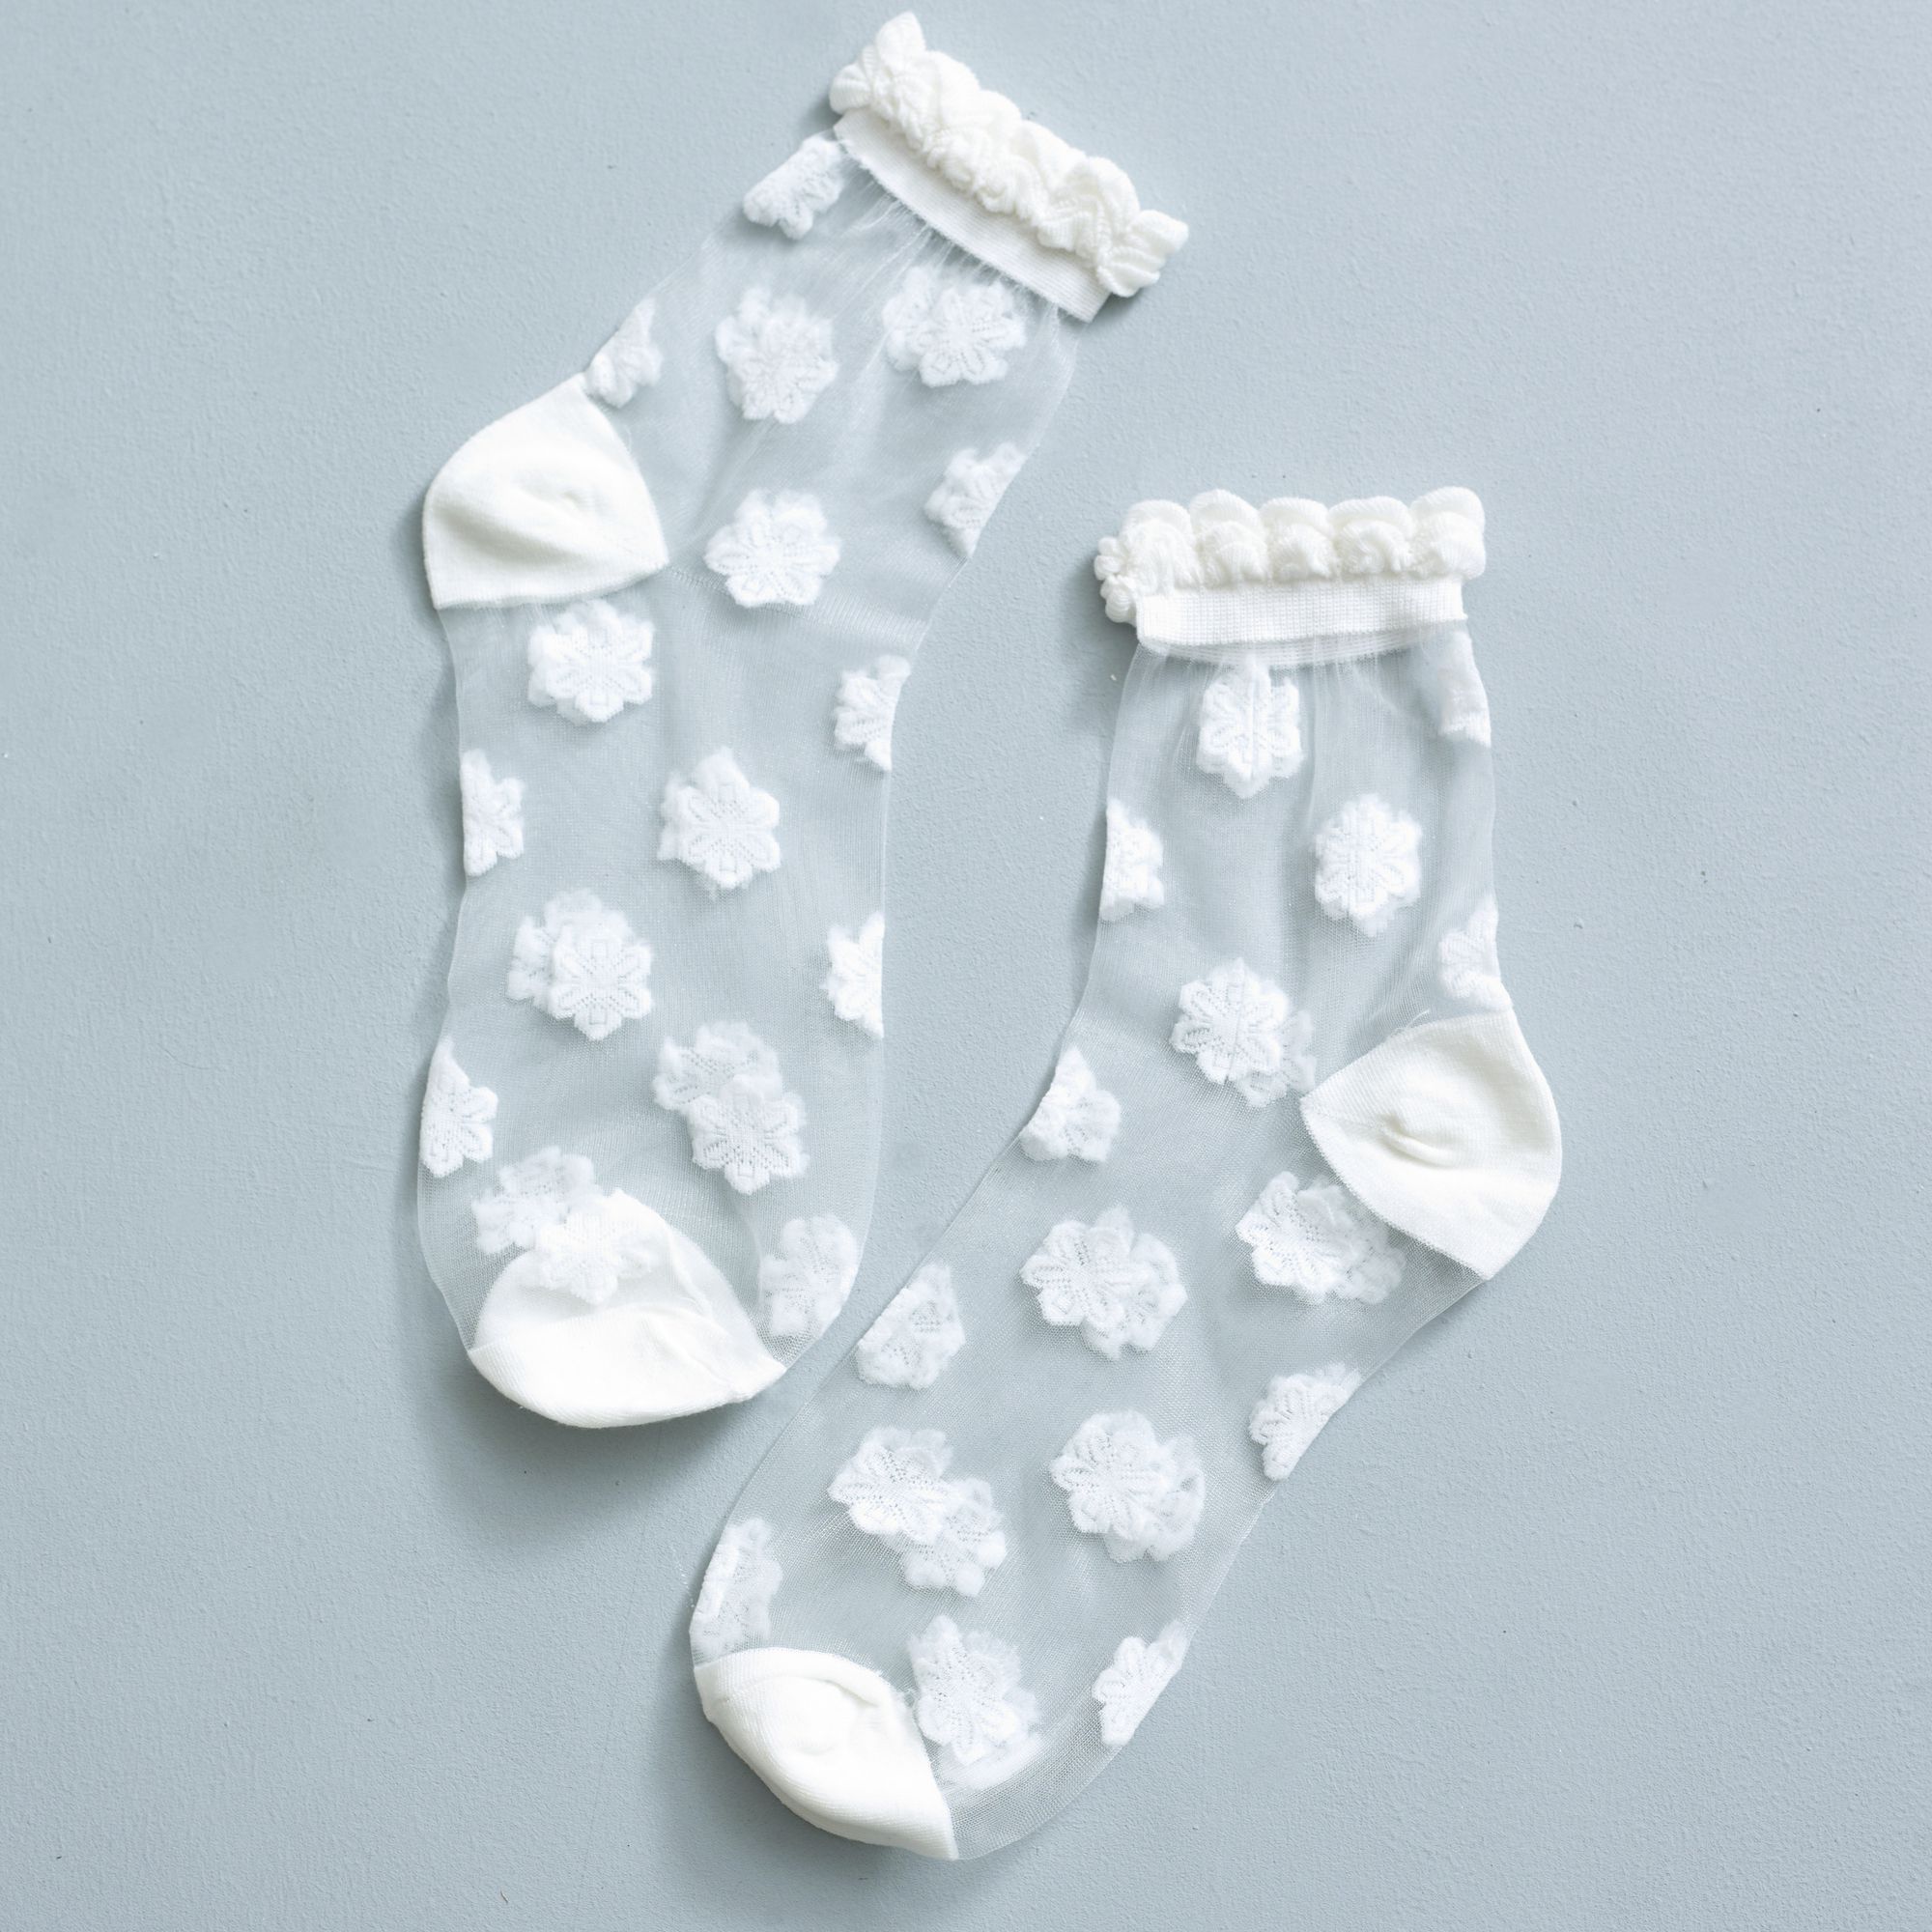 Cutie Pop White Jasmine Sheer Socks X 2 